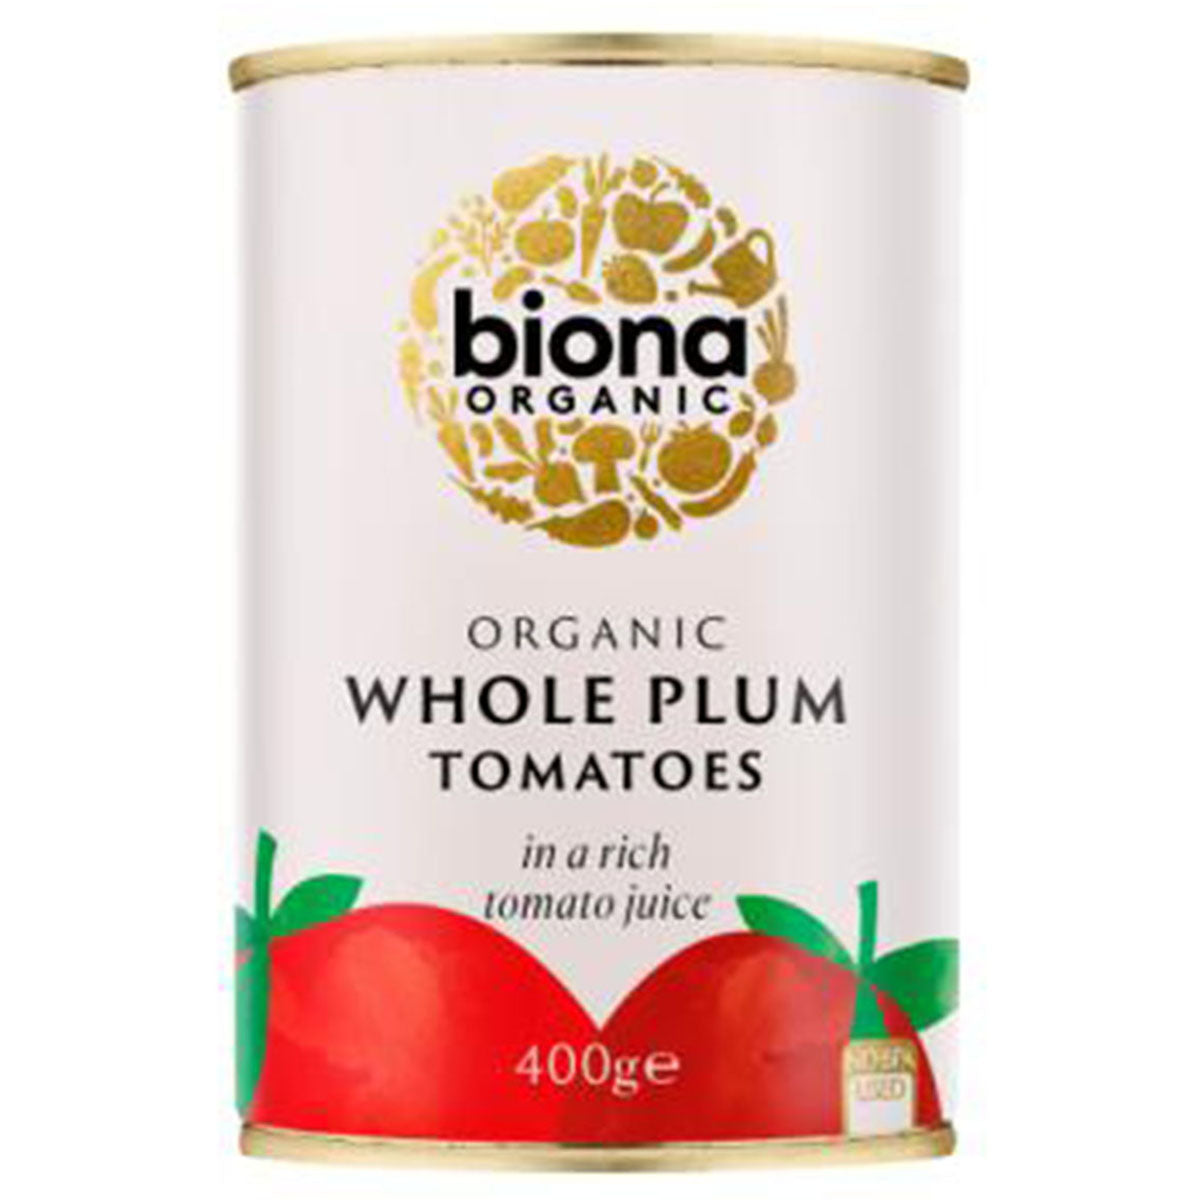 Biona Organic - Whole Plum Tomatoes - 400g - Continental Food Store